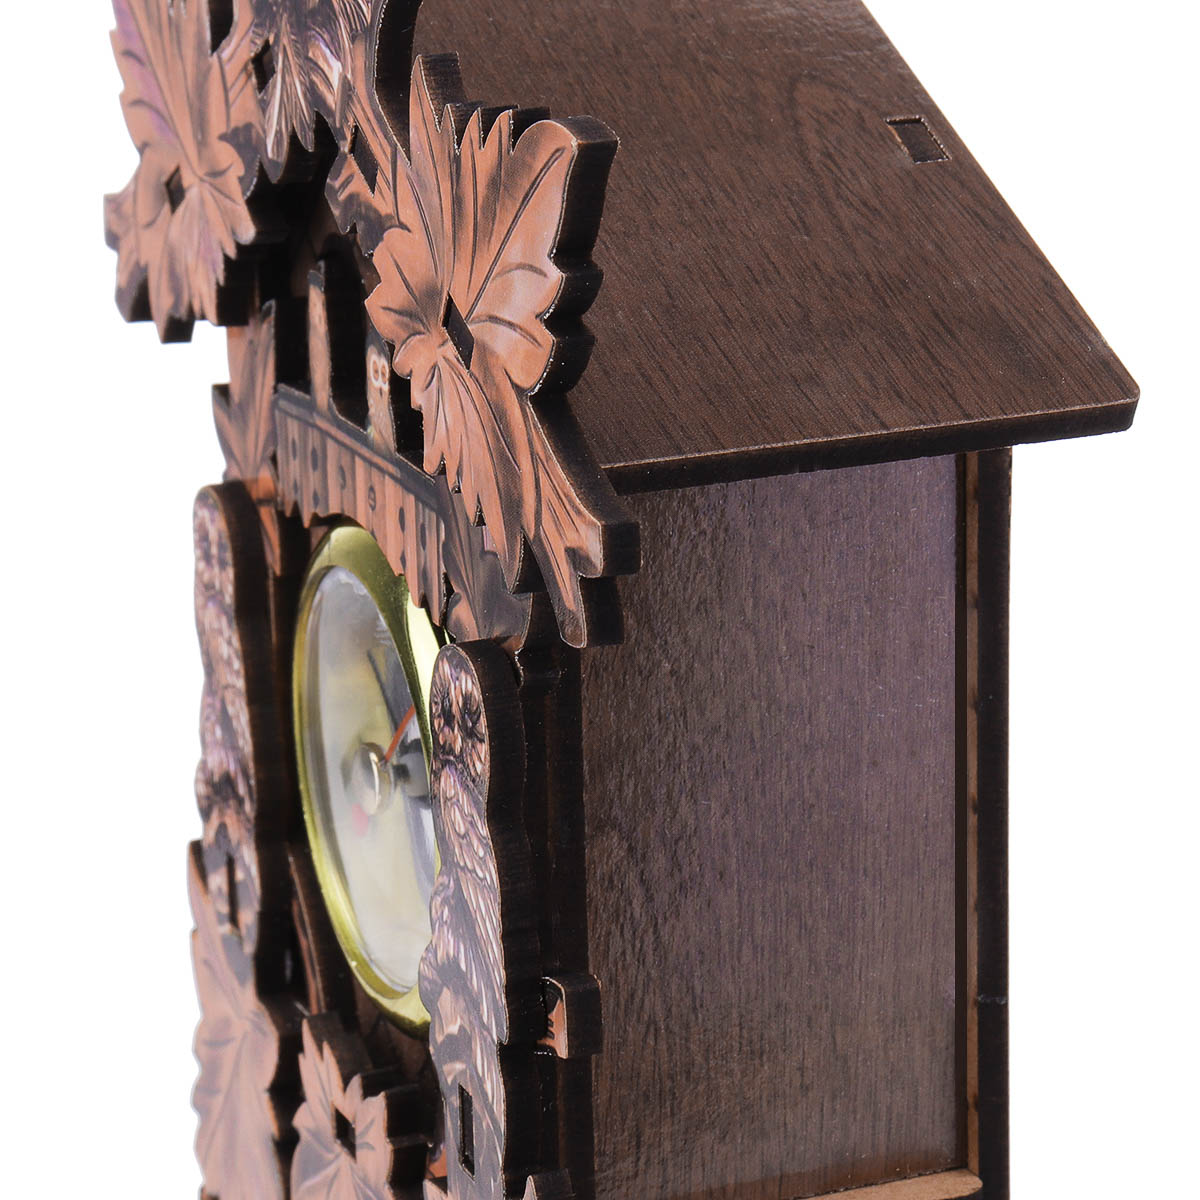 Owl Bird Decorations Home Cafe Art Chic Swing Vintage Wood Cuckoo Wall Clock